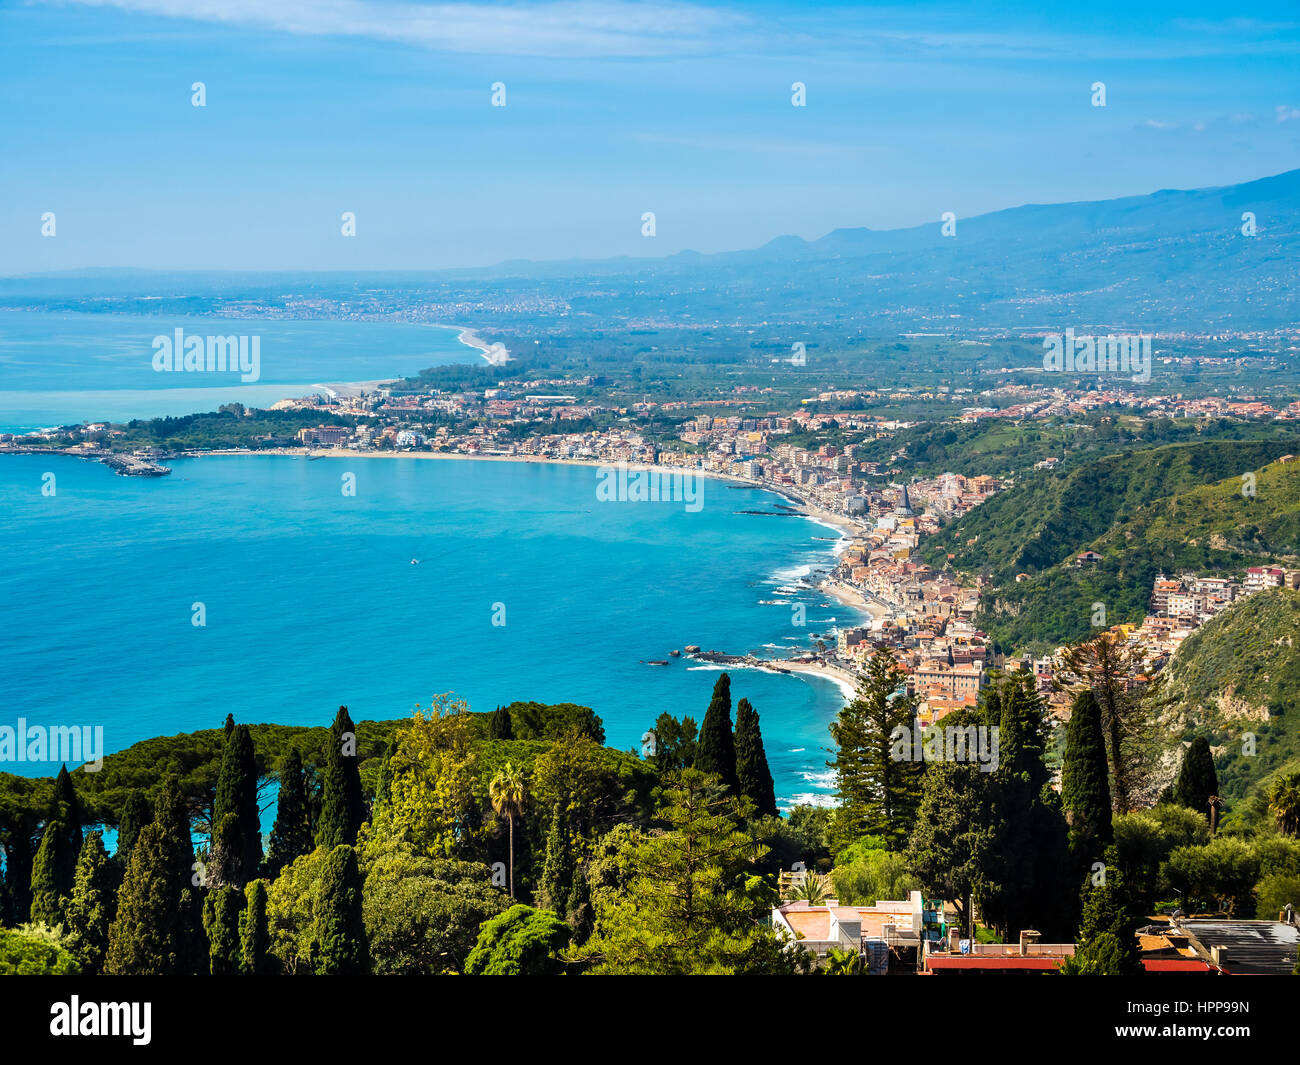 Italy, Sicily, Taormina, view to the coast from above Stock Photo